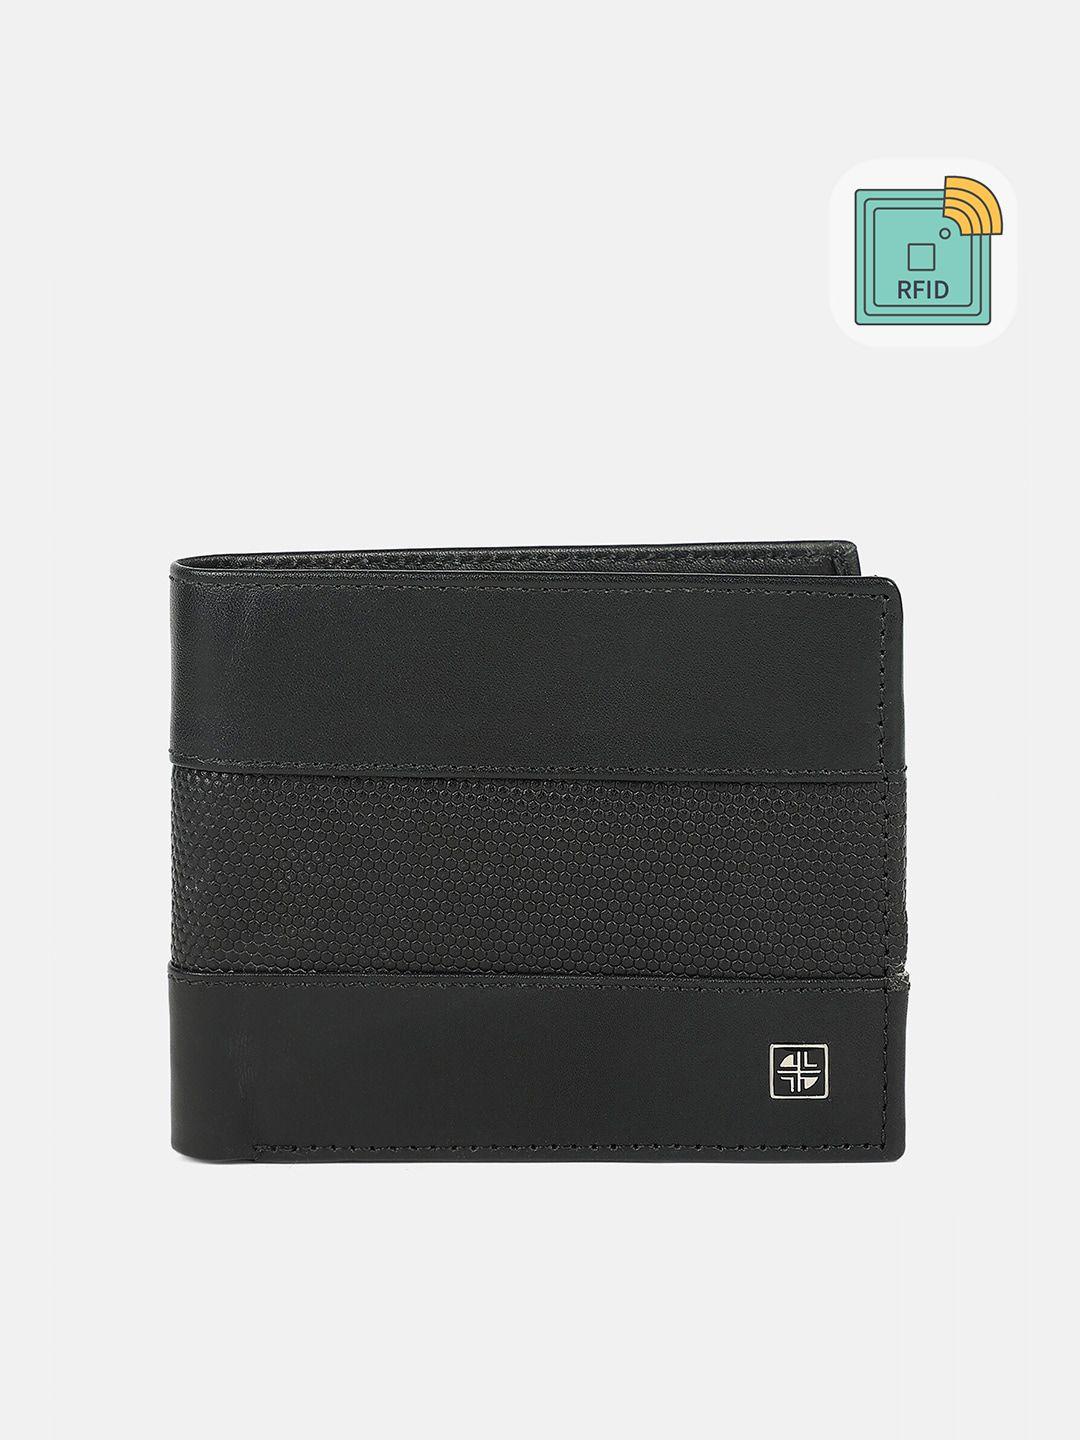 carlton london men black textured leather two fold wallet